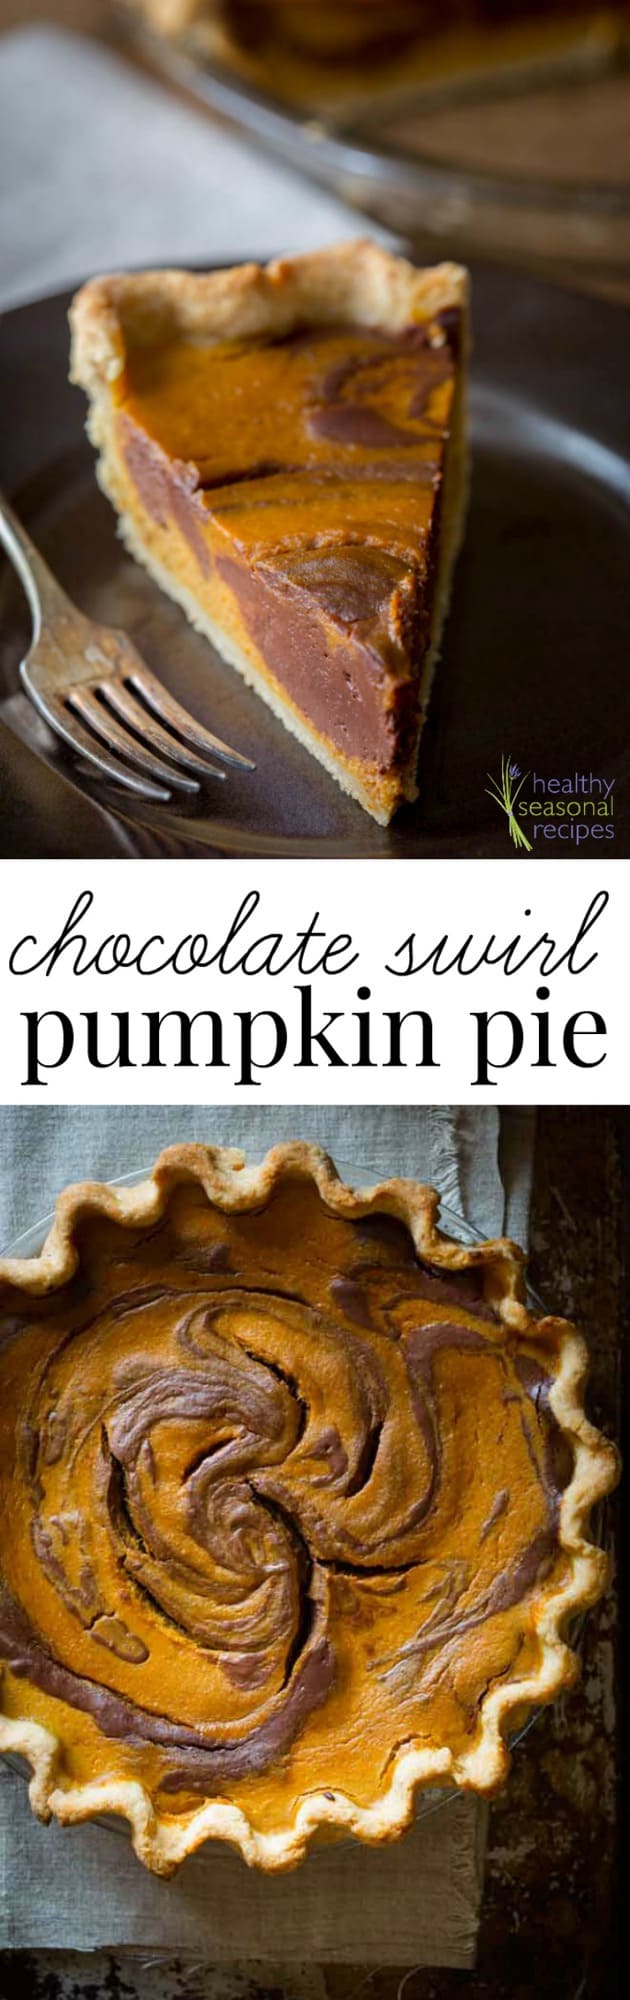 chocolate swirl pumpkin pie - Healthy Seasonal Recipes